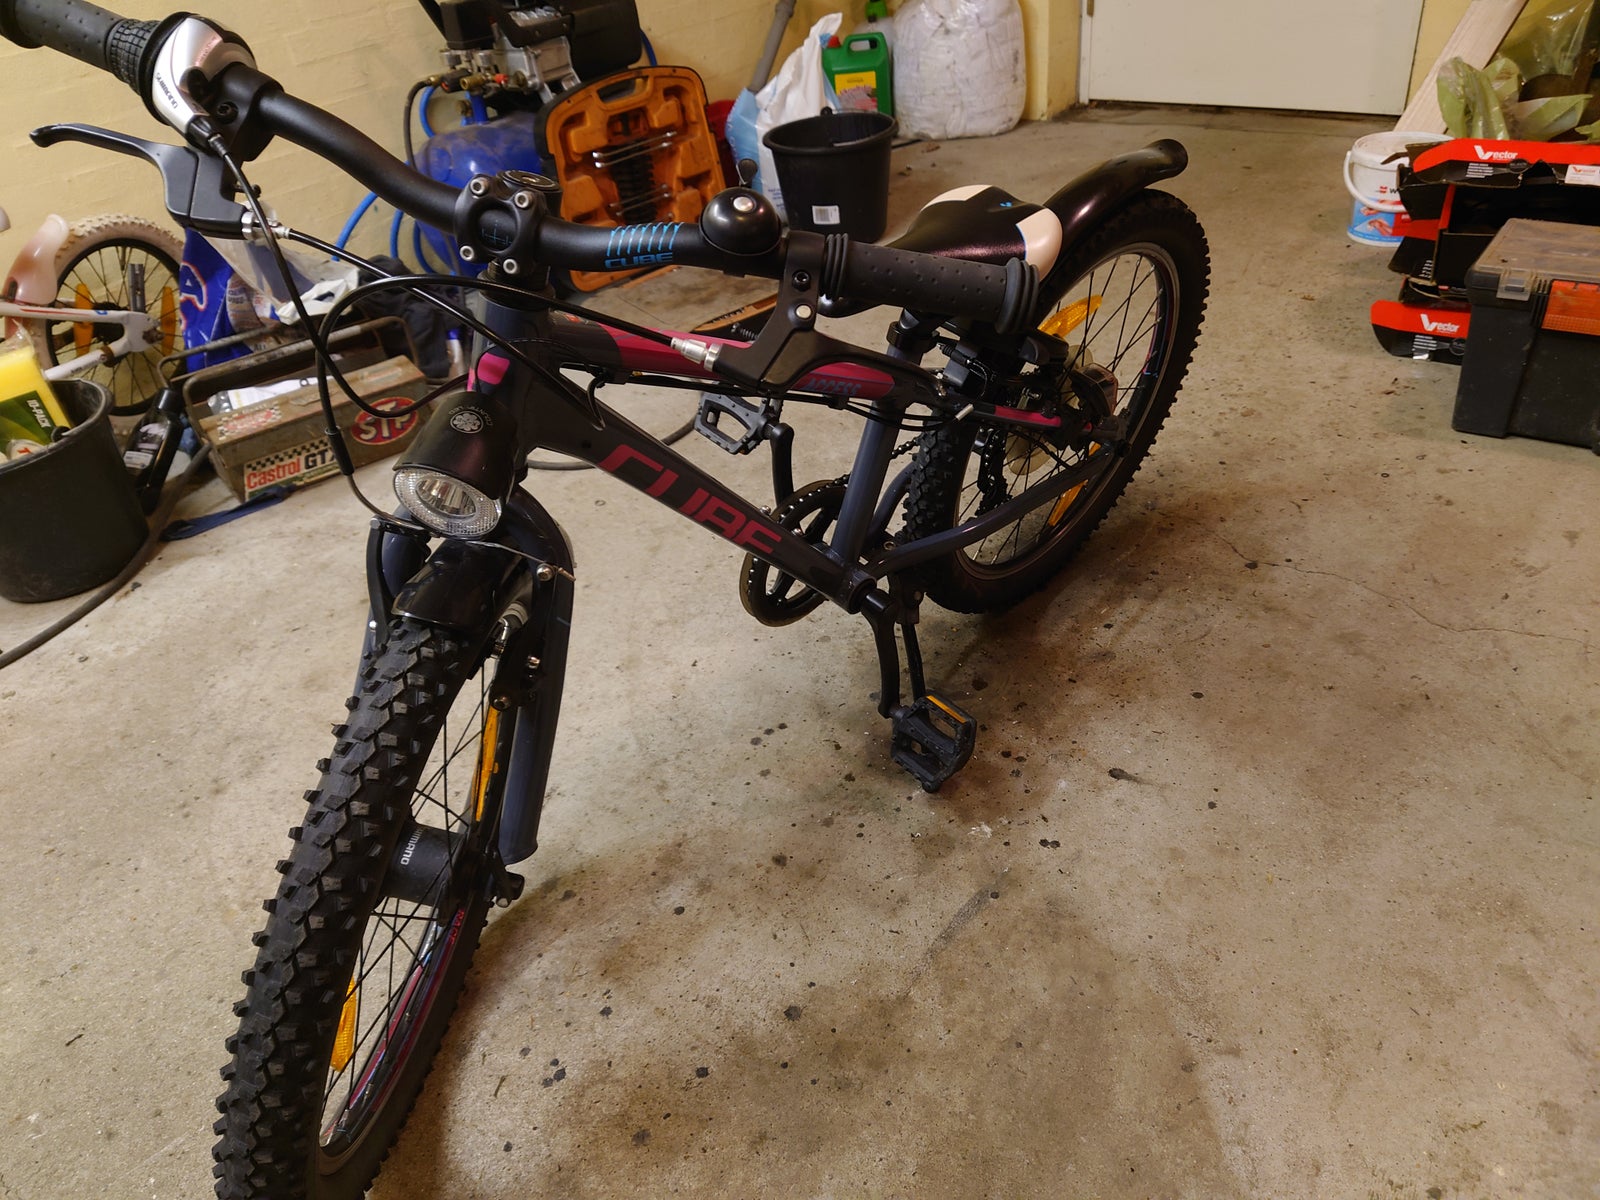 Unisex børnecykel, mountainbike, 20 tommer hjul